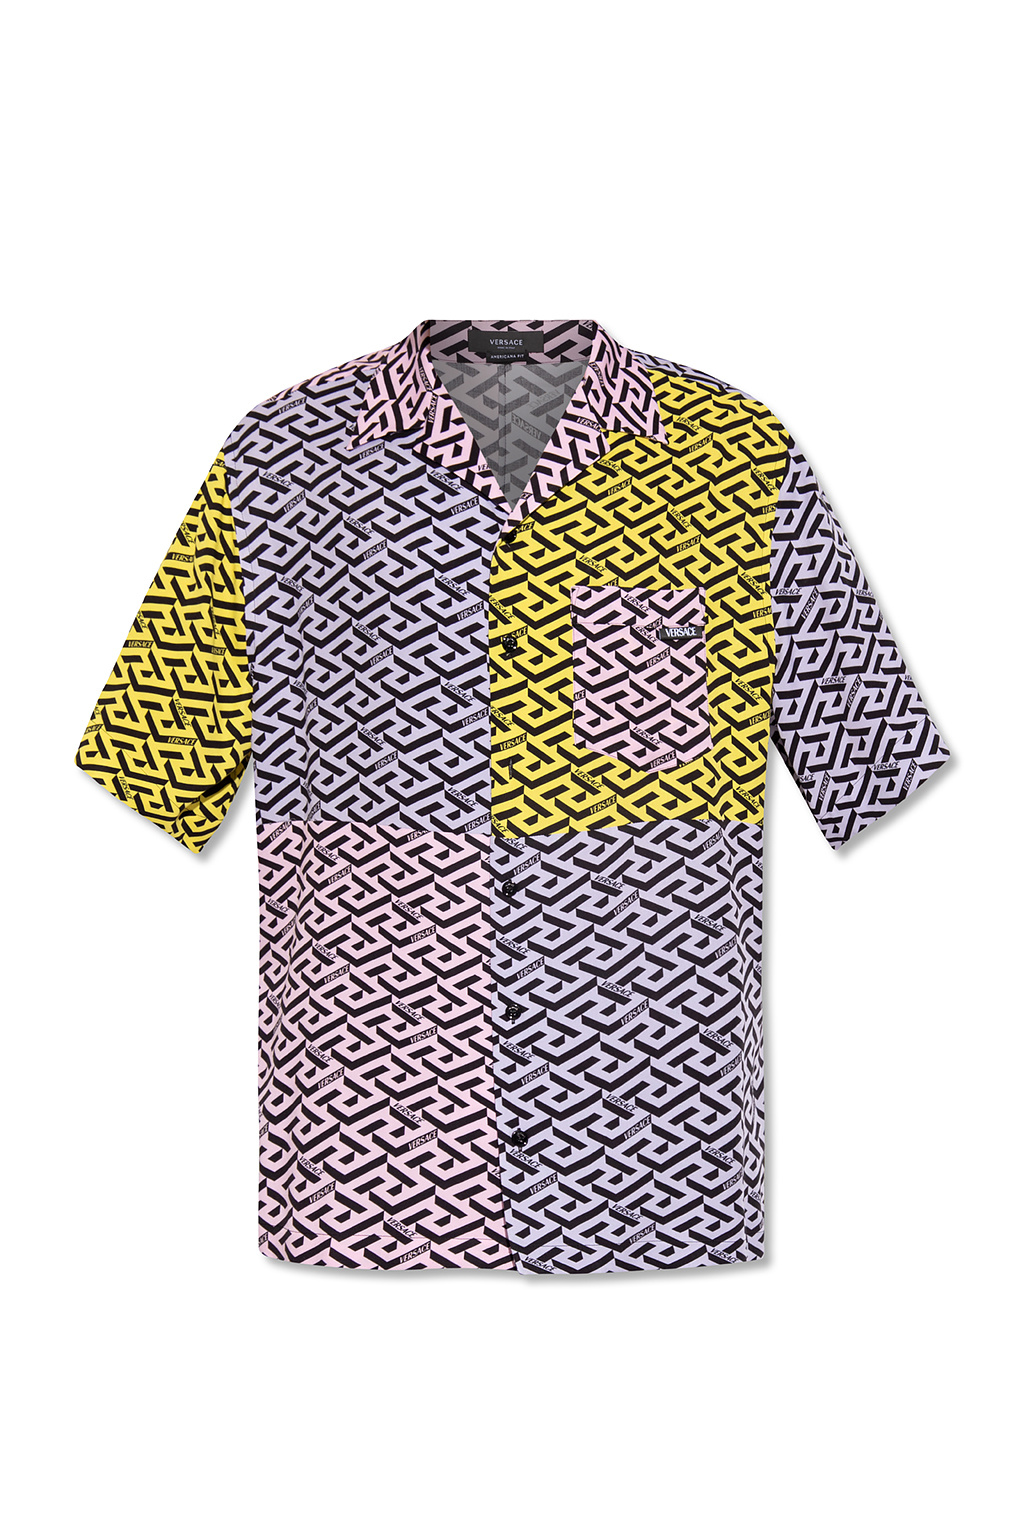 Versace Girl shirt with ‘La Greca’ pattern